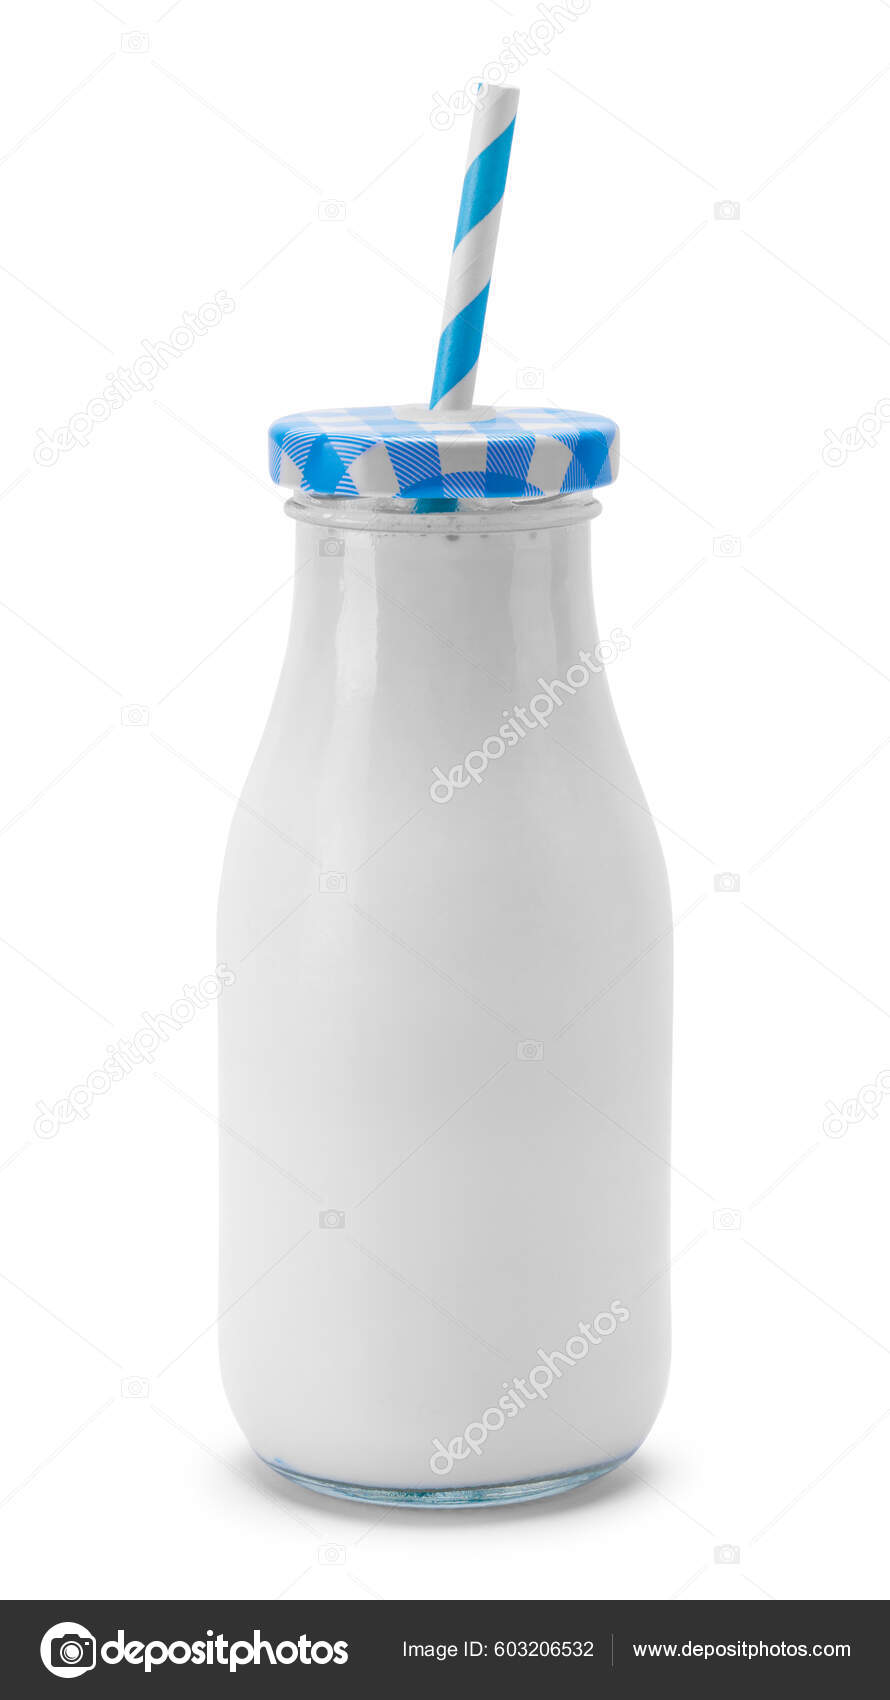 https://st.depositphotos.com/3322093/60320/i/1600/depositphotos_603206532-stock-photo-small-milk-bottle-blue-lid.jpg